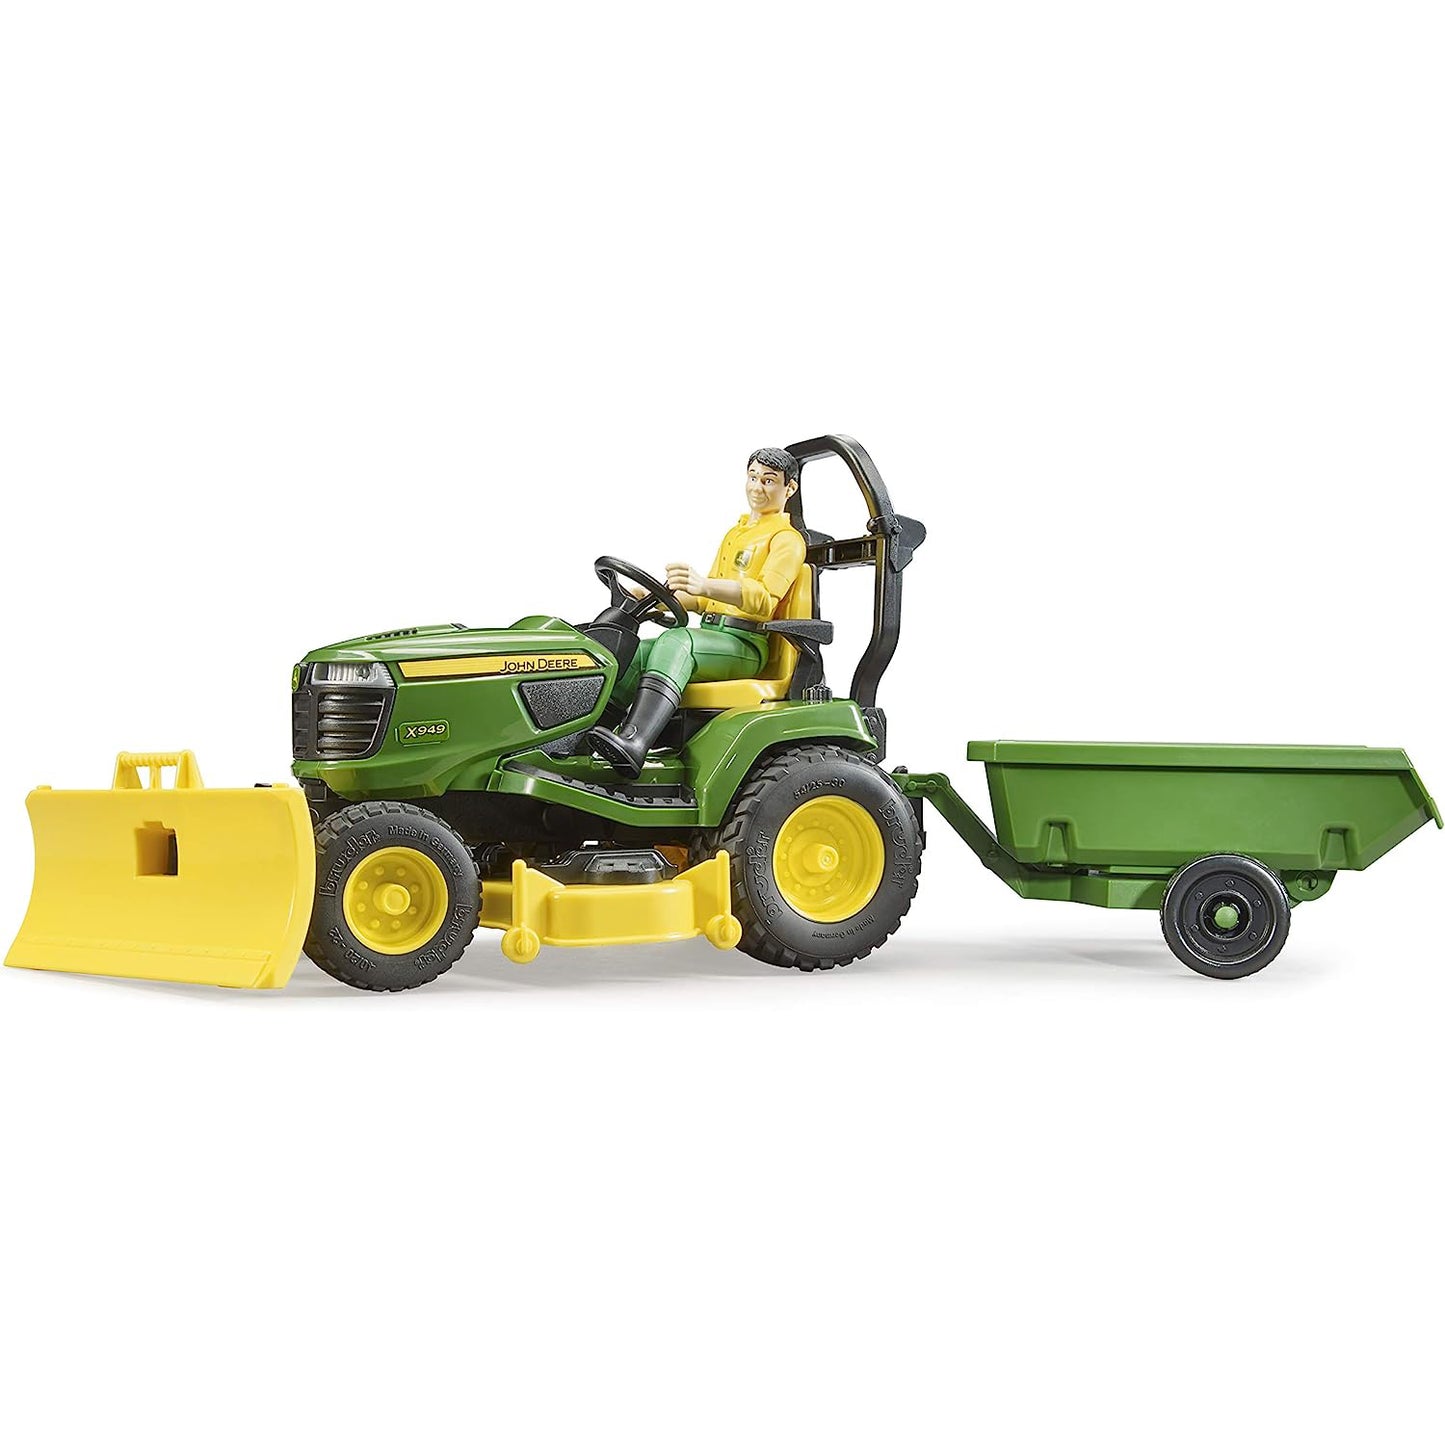 Bruder 09824 bworld John Deere Lawn Tractor w Trailer and Gardener